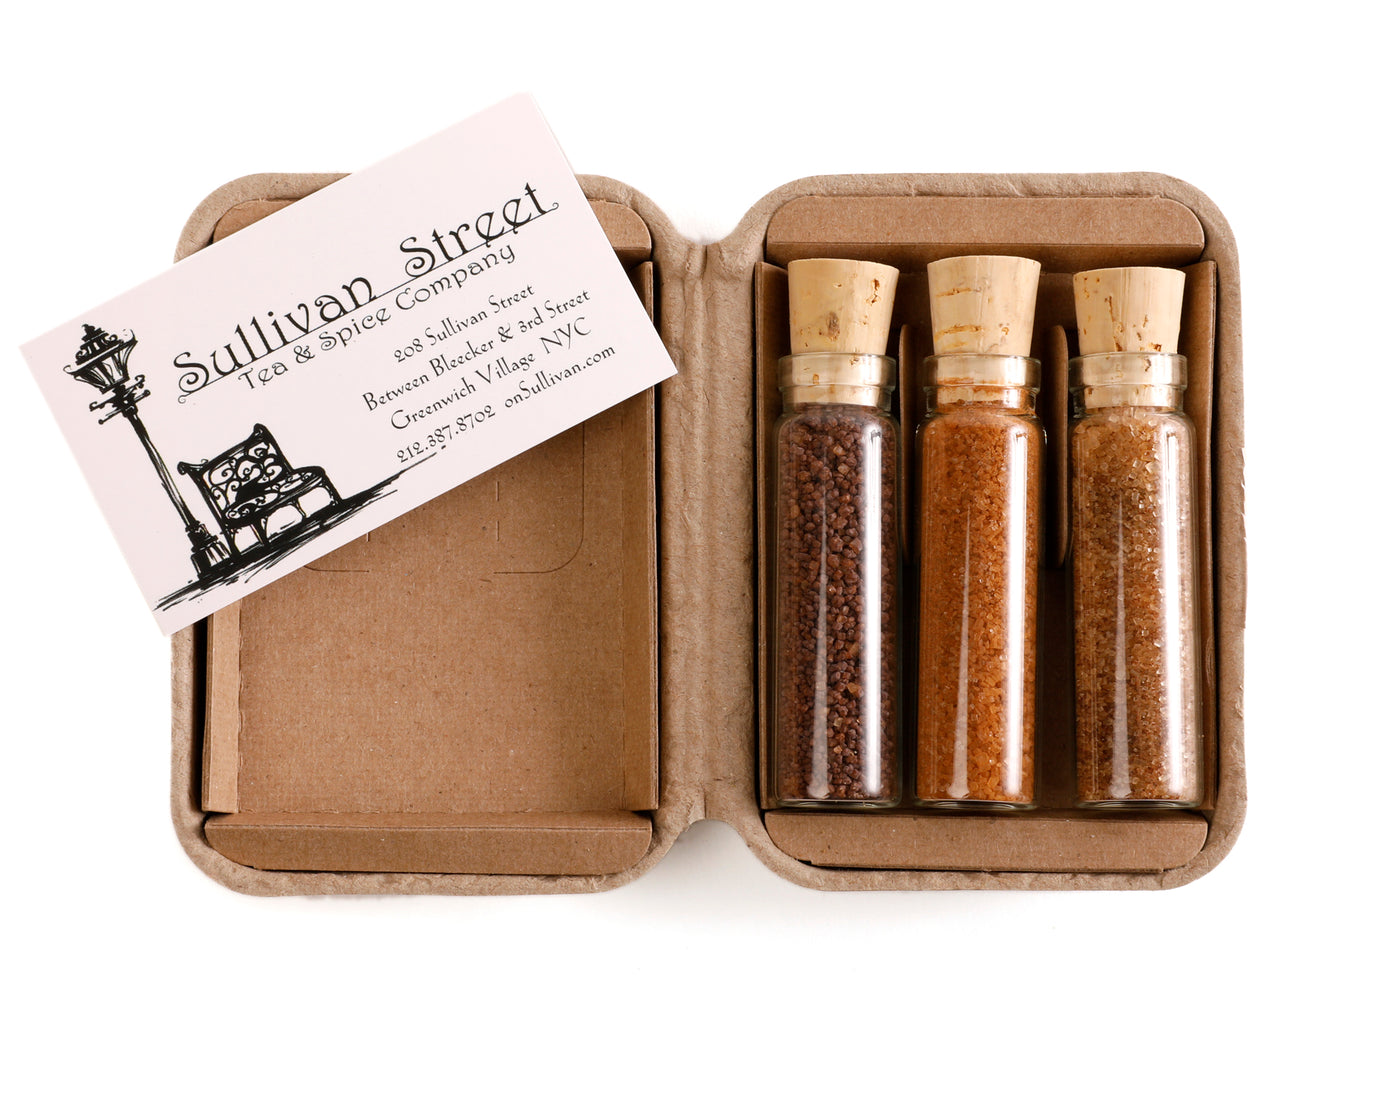 Warm 'n' Cozy - Sugar Sampler - Sullivan Street Tea & Spice Company